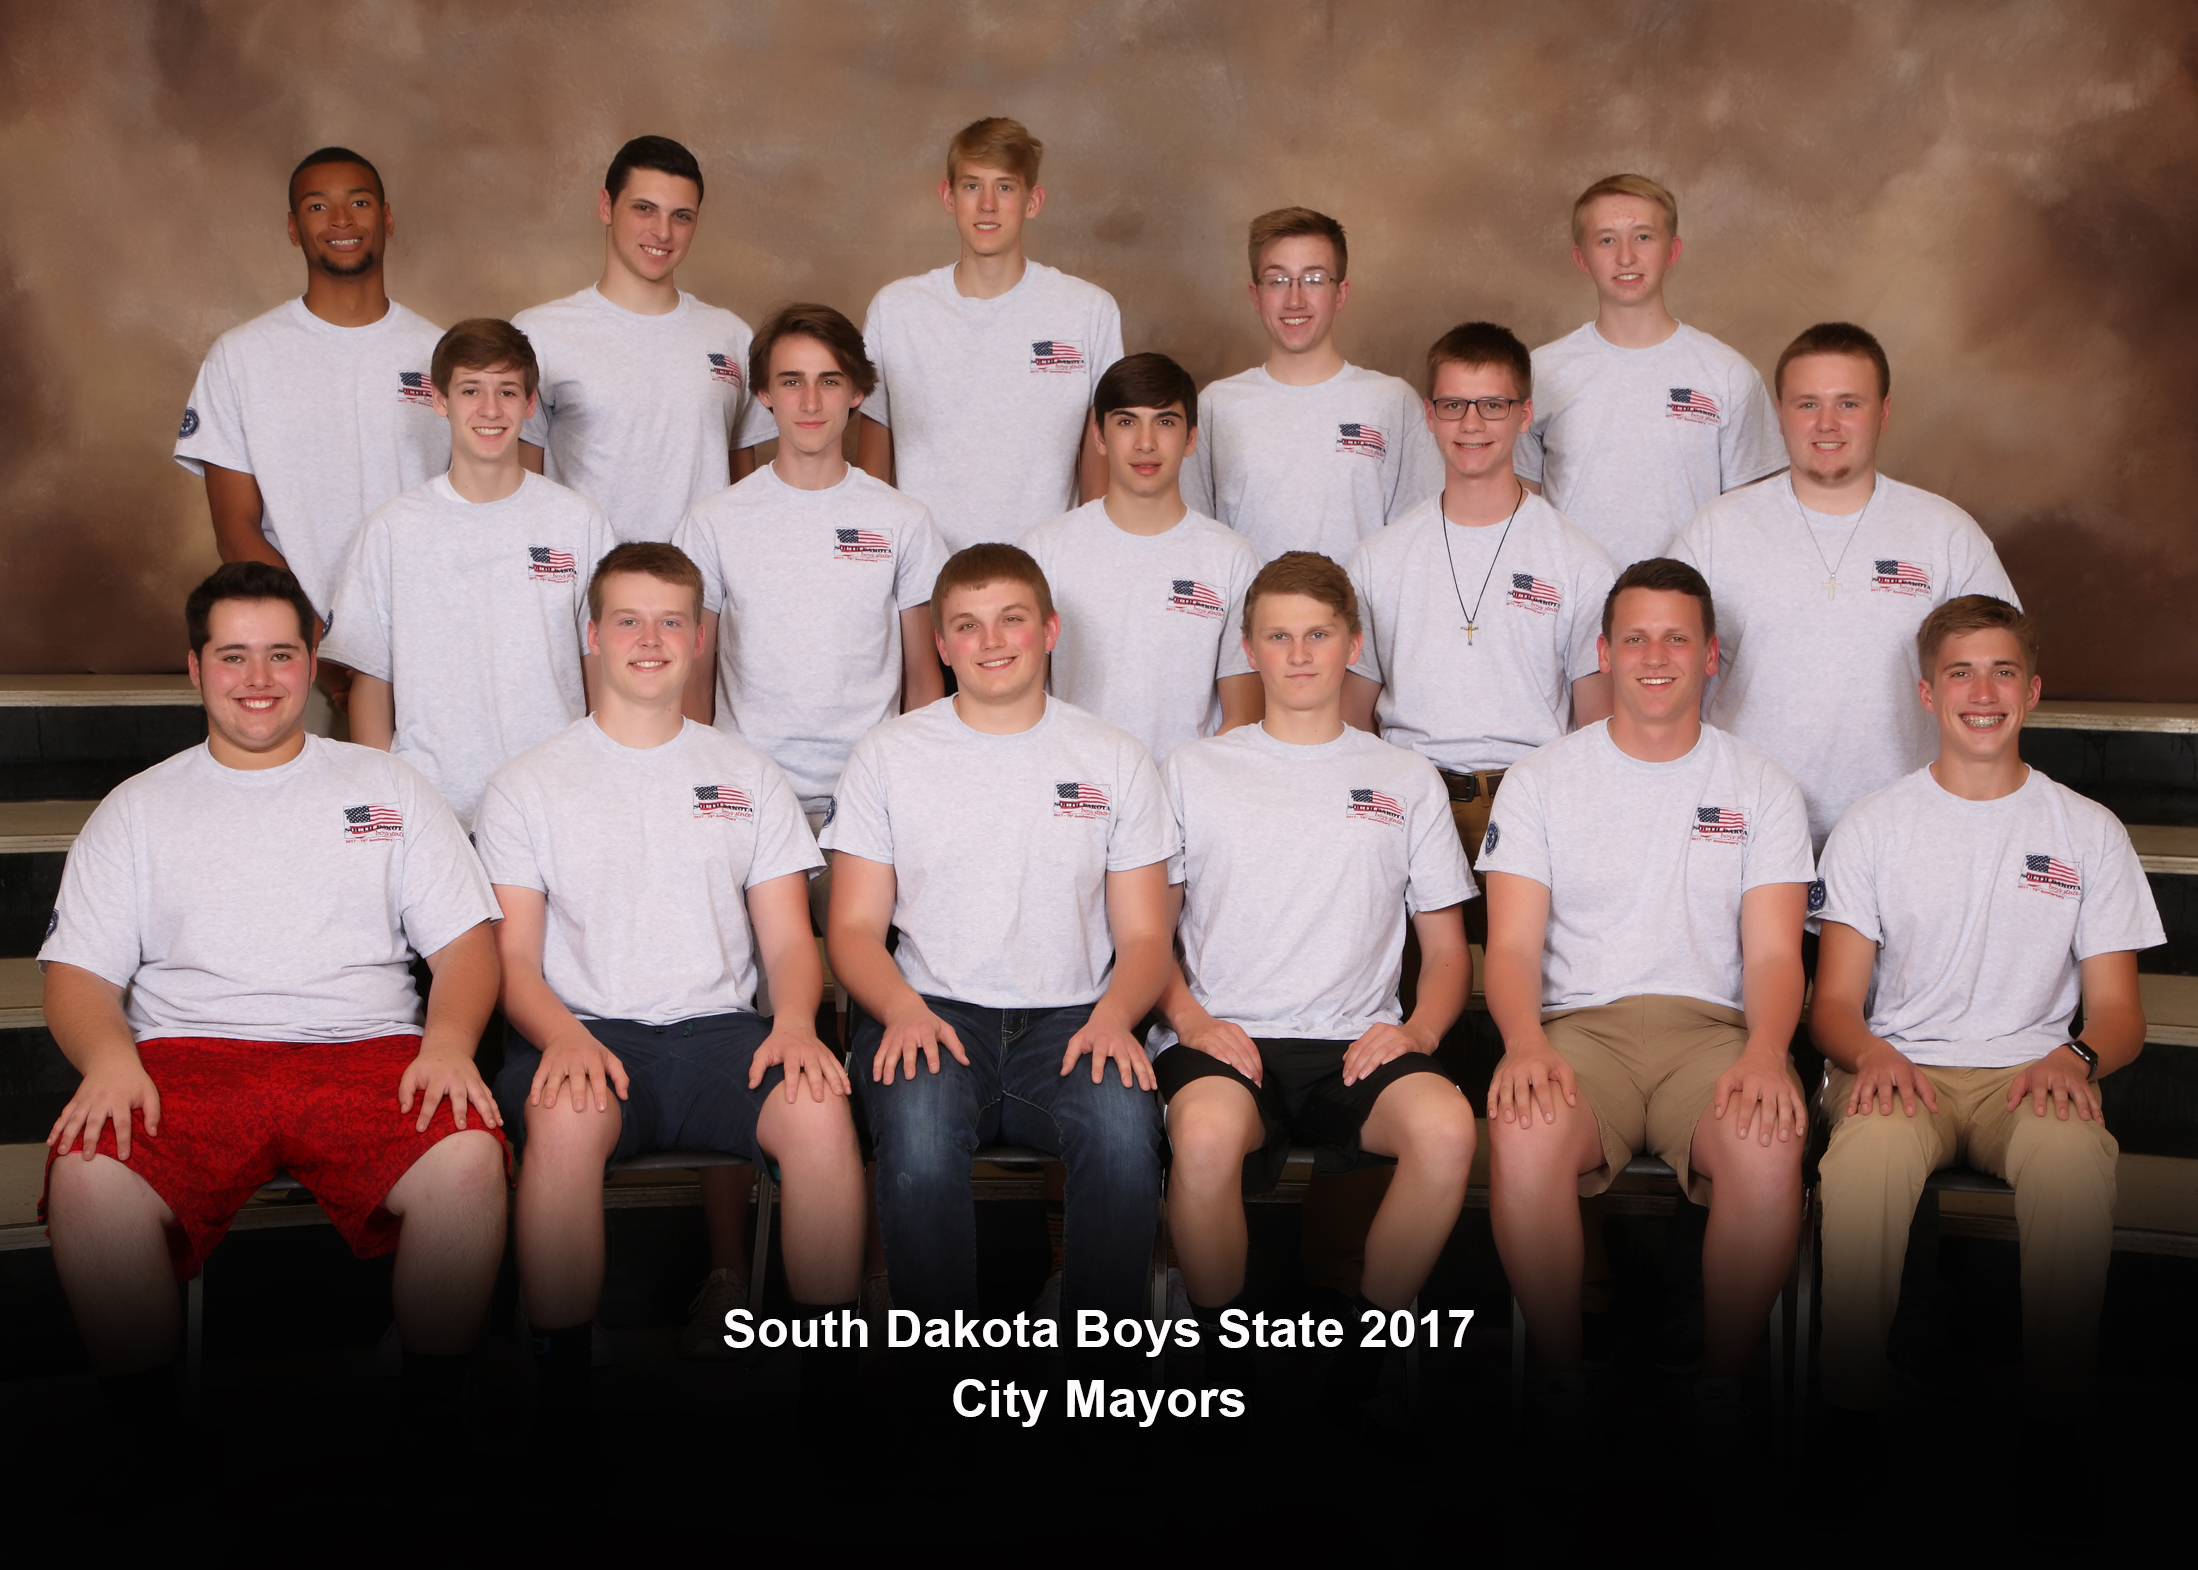 City Mayors 2017